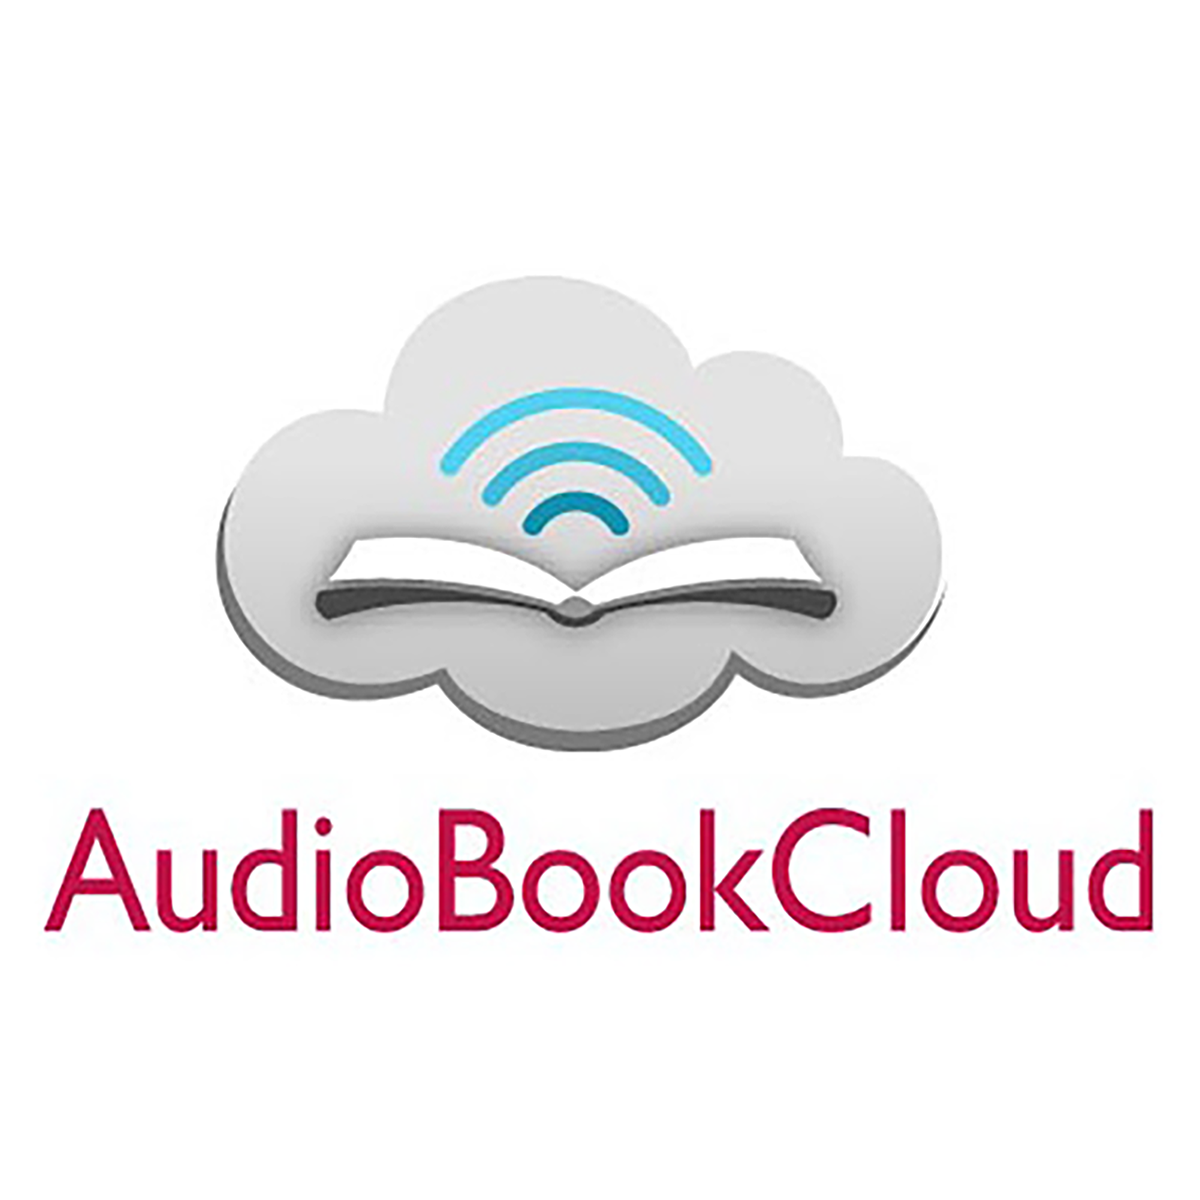 Audiobook Cloud graphic